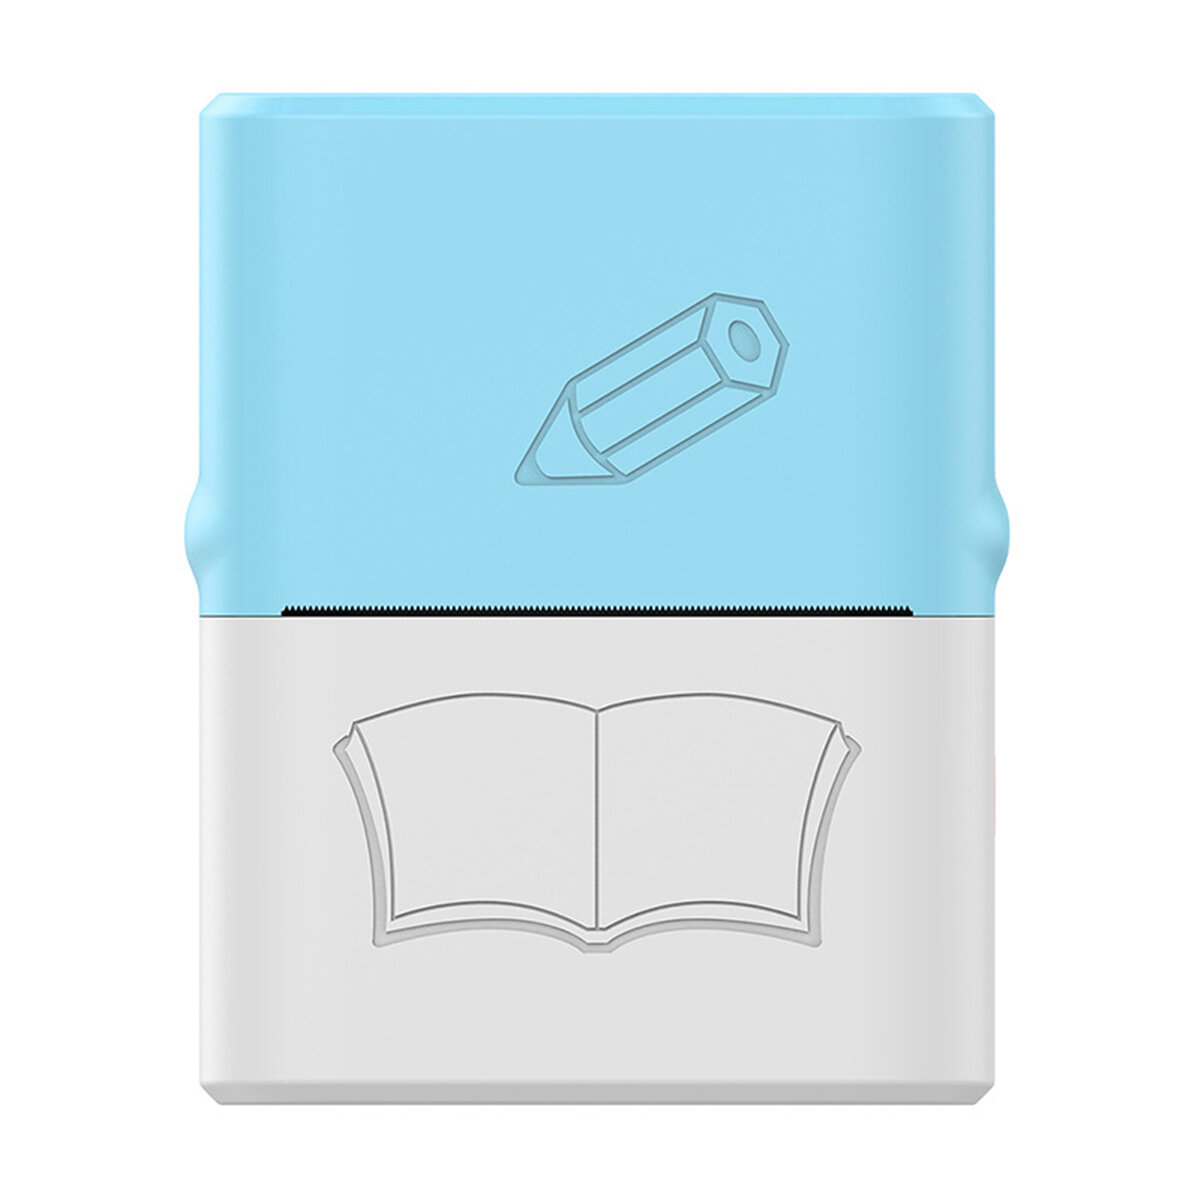 U80 Mini Bluetooth Thermische Printer Draagbare Zak Inktloze Fotoprintmachine Voor Android iOS-telef